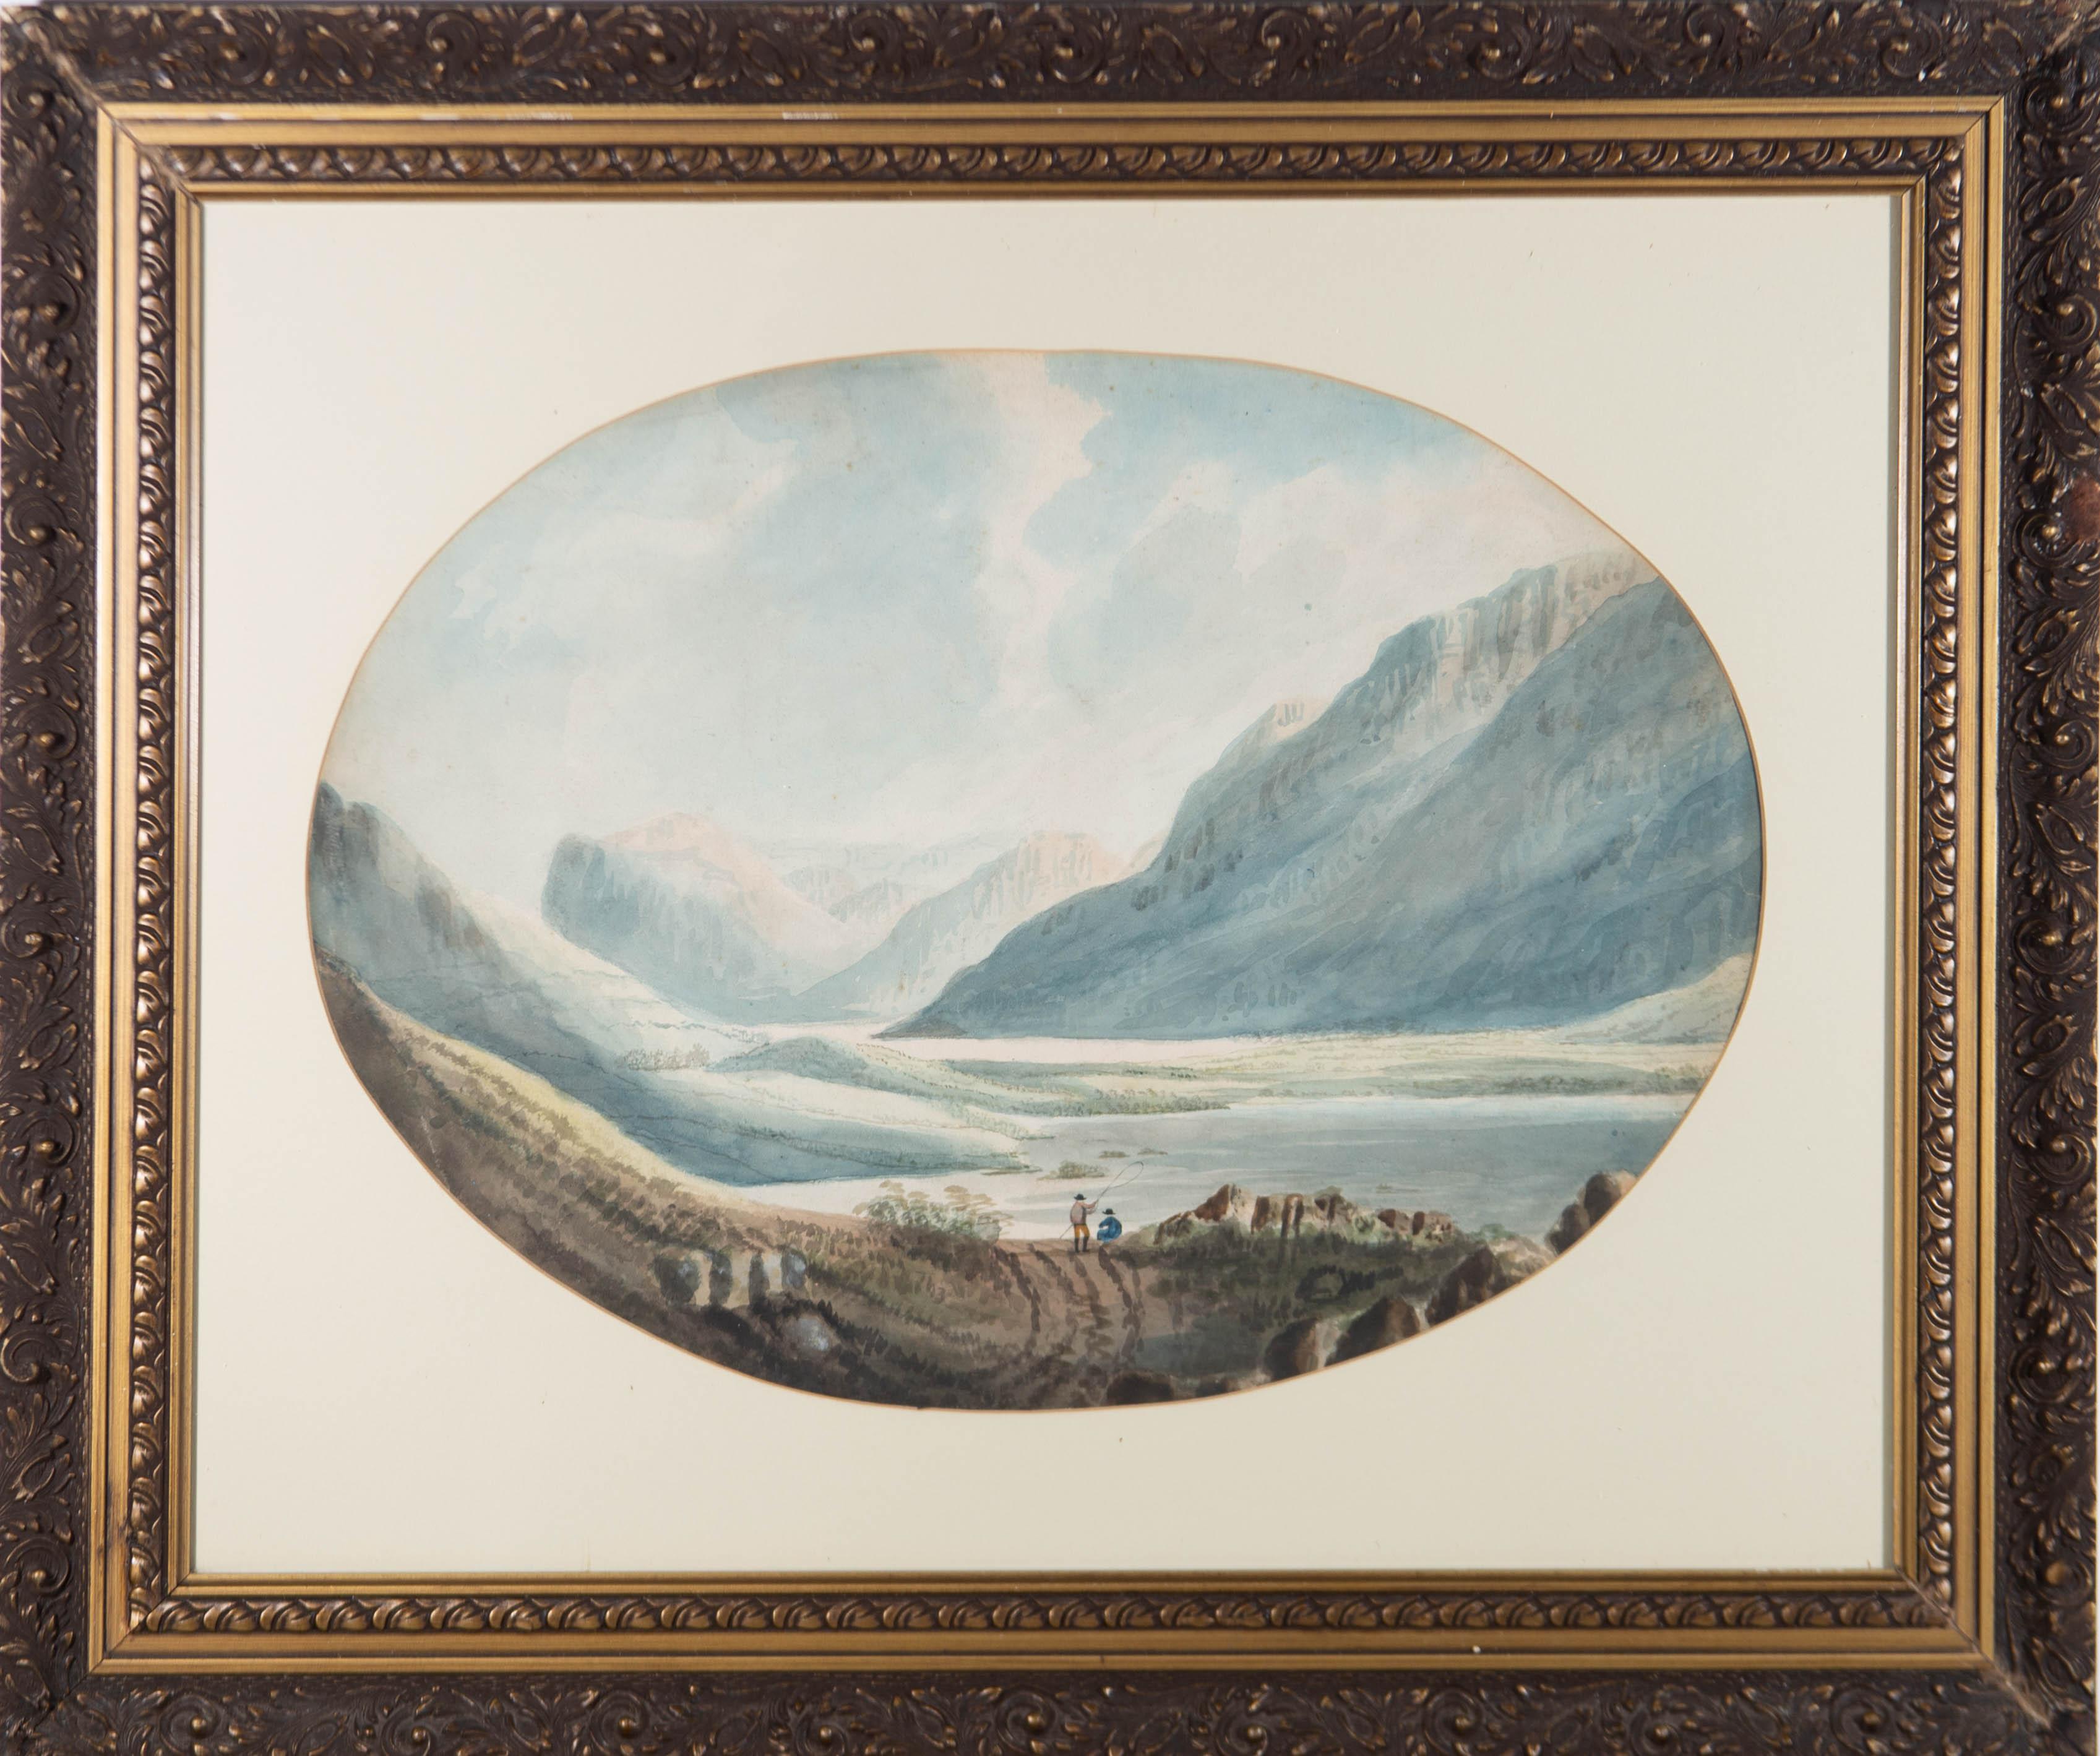 Unknown Landscape Art - Early 19th Century Watercolour - Mountain Lake Scene